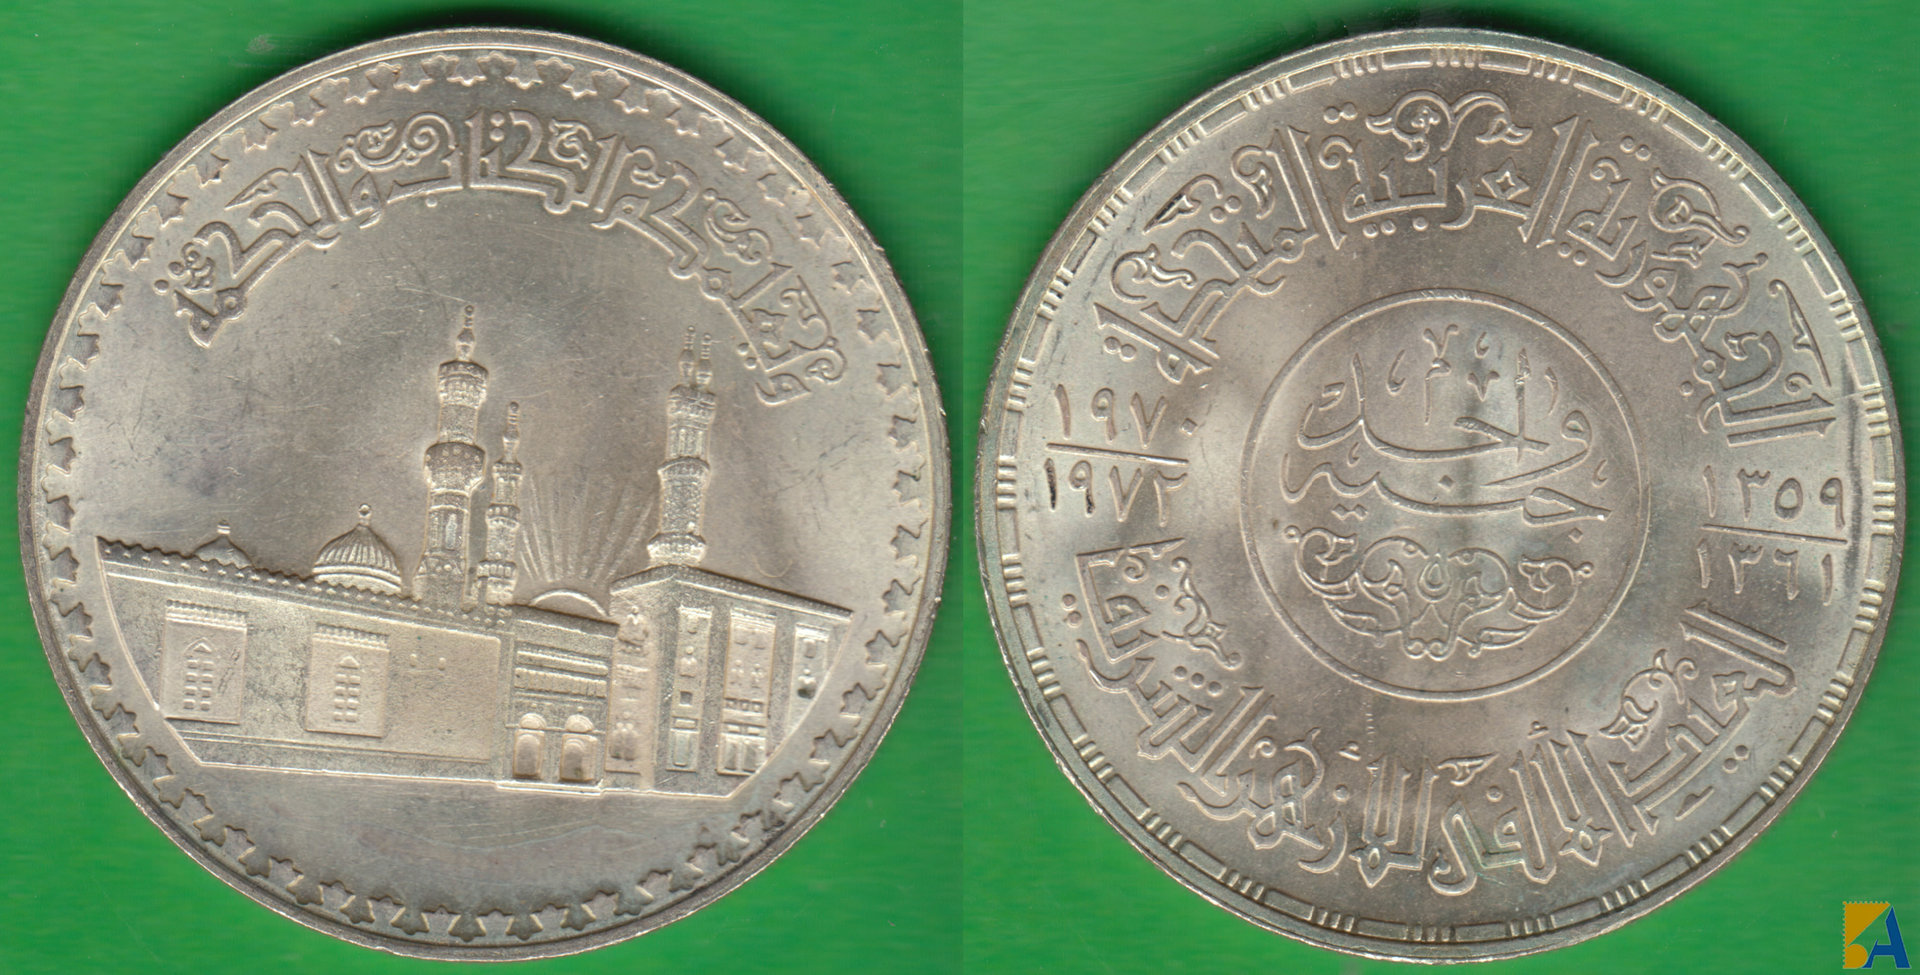 EGIPTO - EGYPT. 1 LIBRA (POUND) DE 1970. PLATA 0.720. (4)